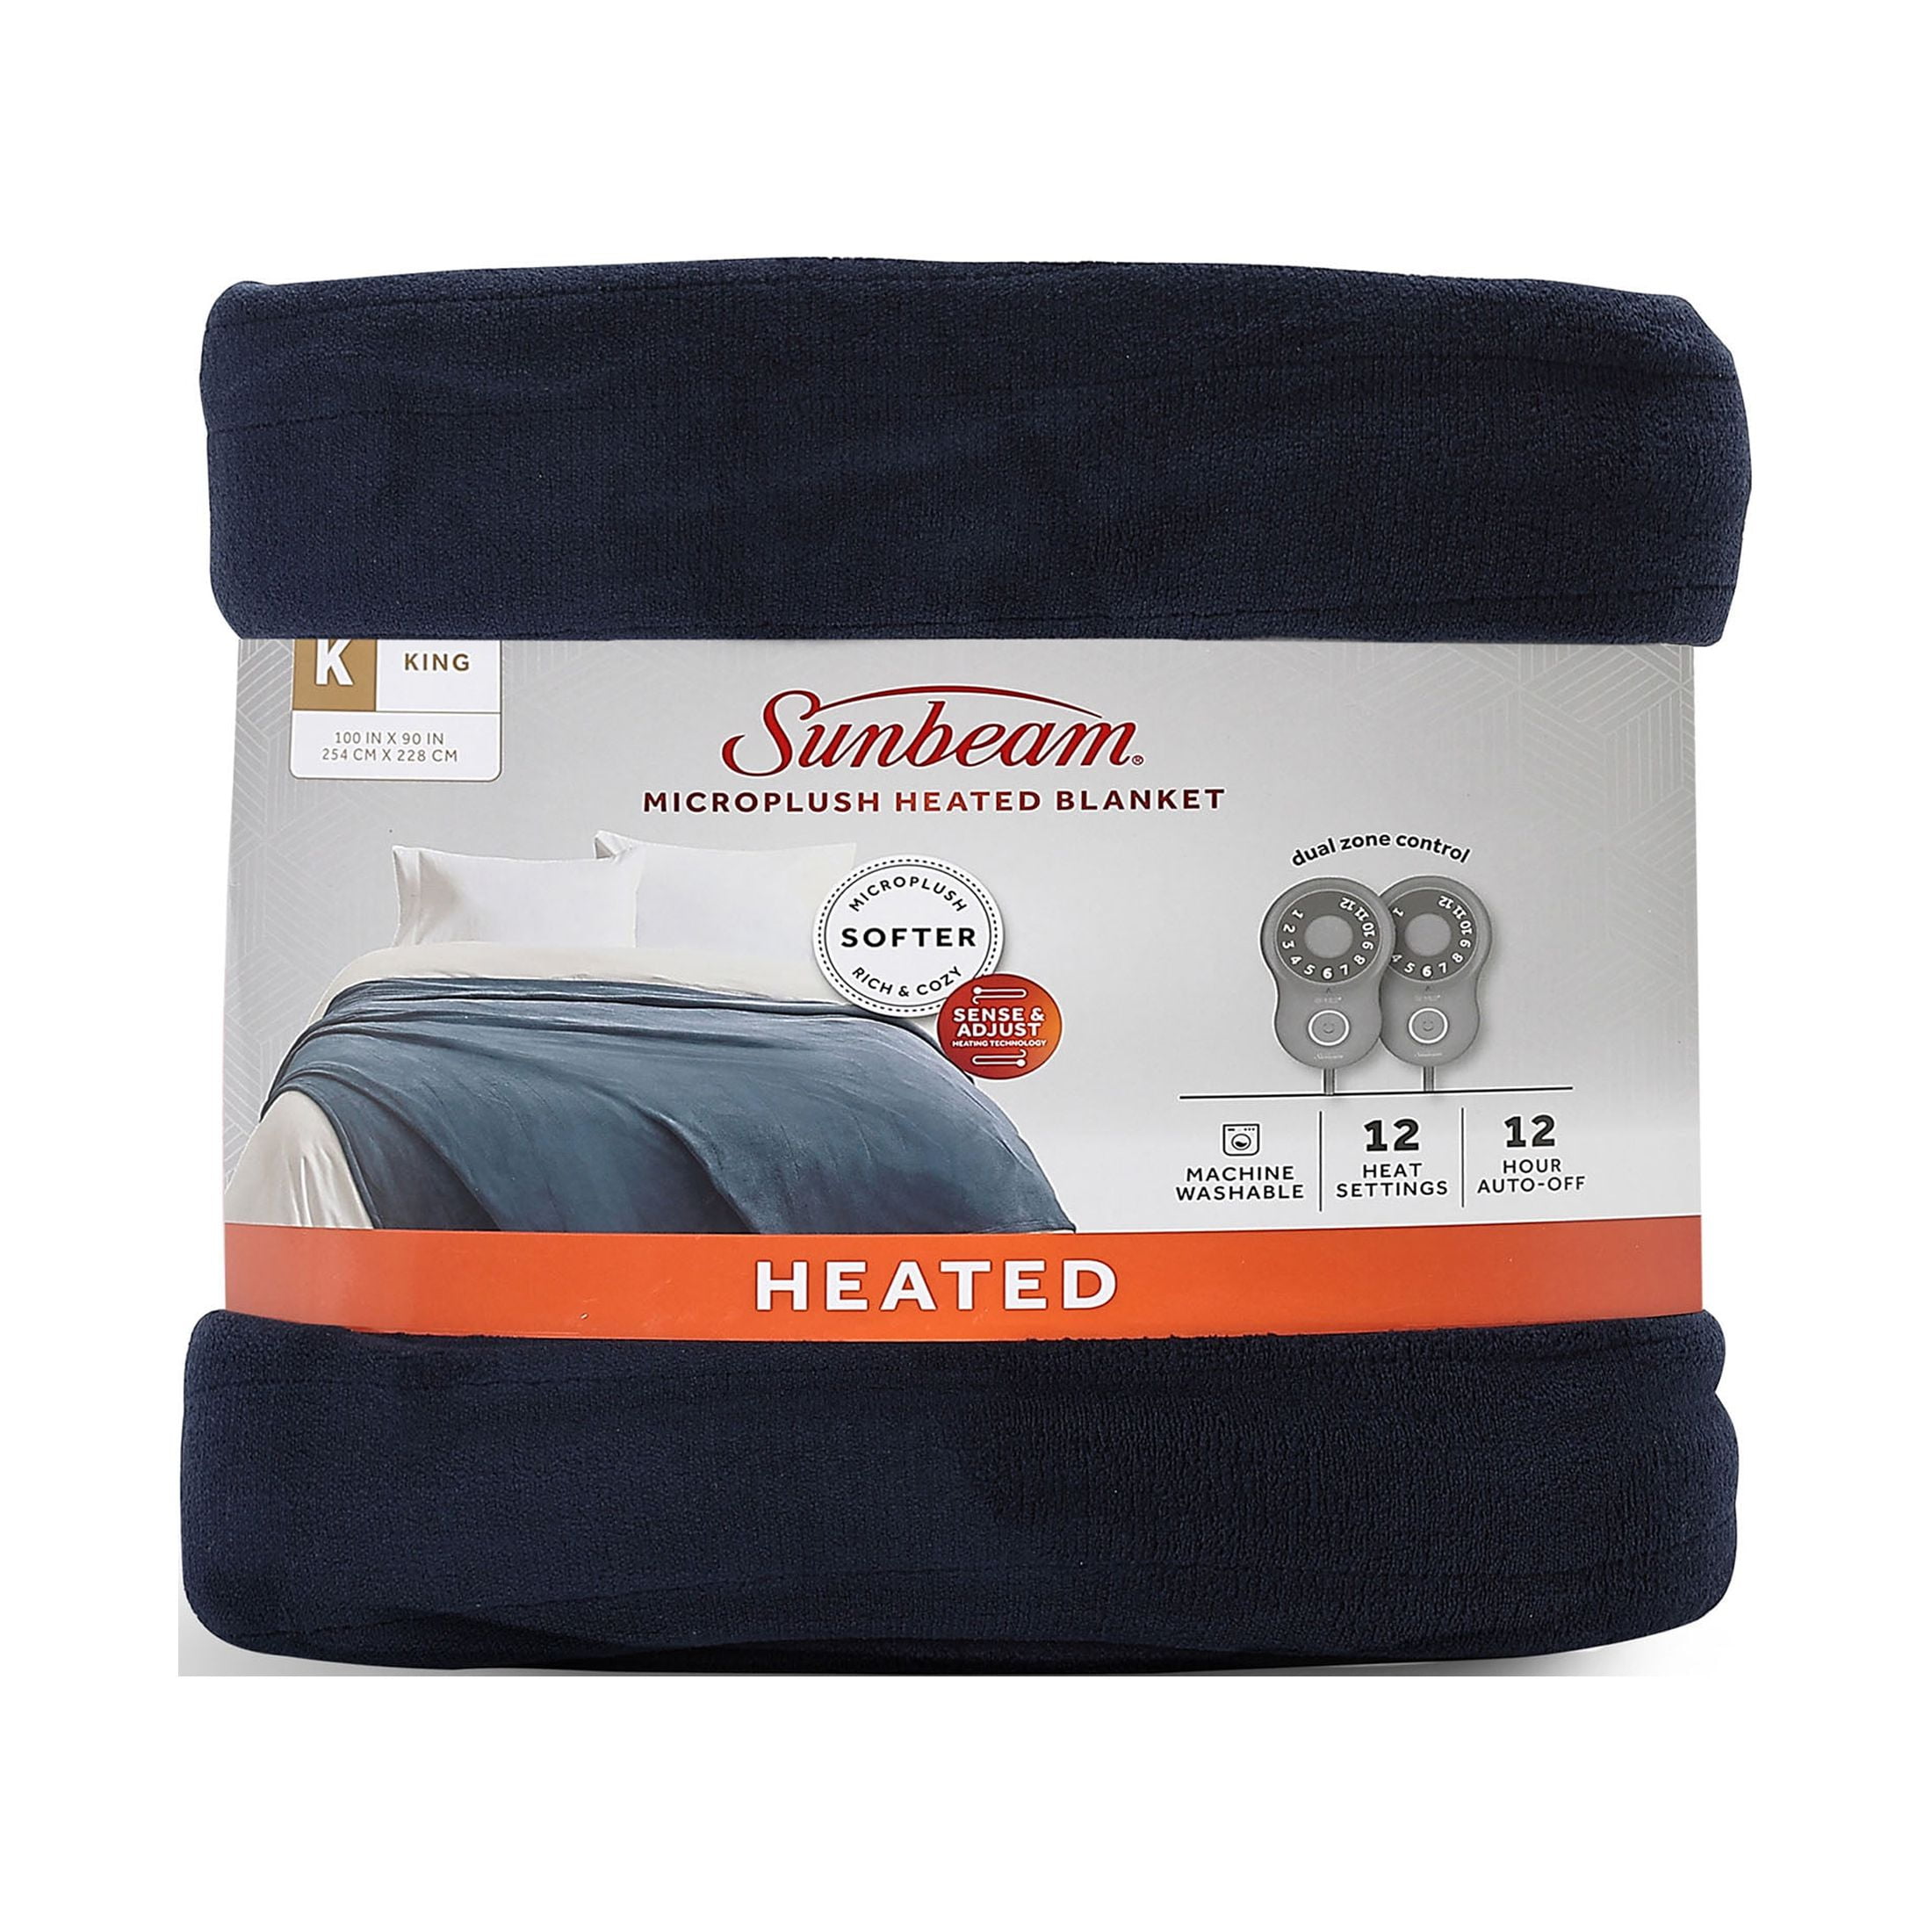 Sunbeam Microplush Electric Heated Blanket, Poseidon Blue, King ...